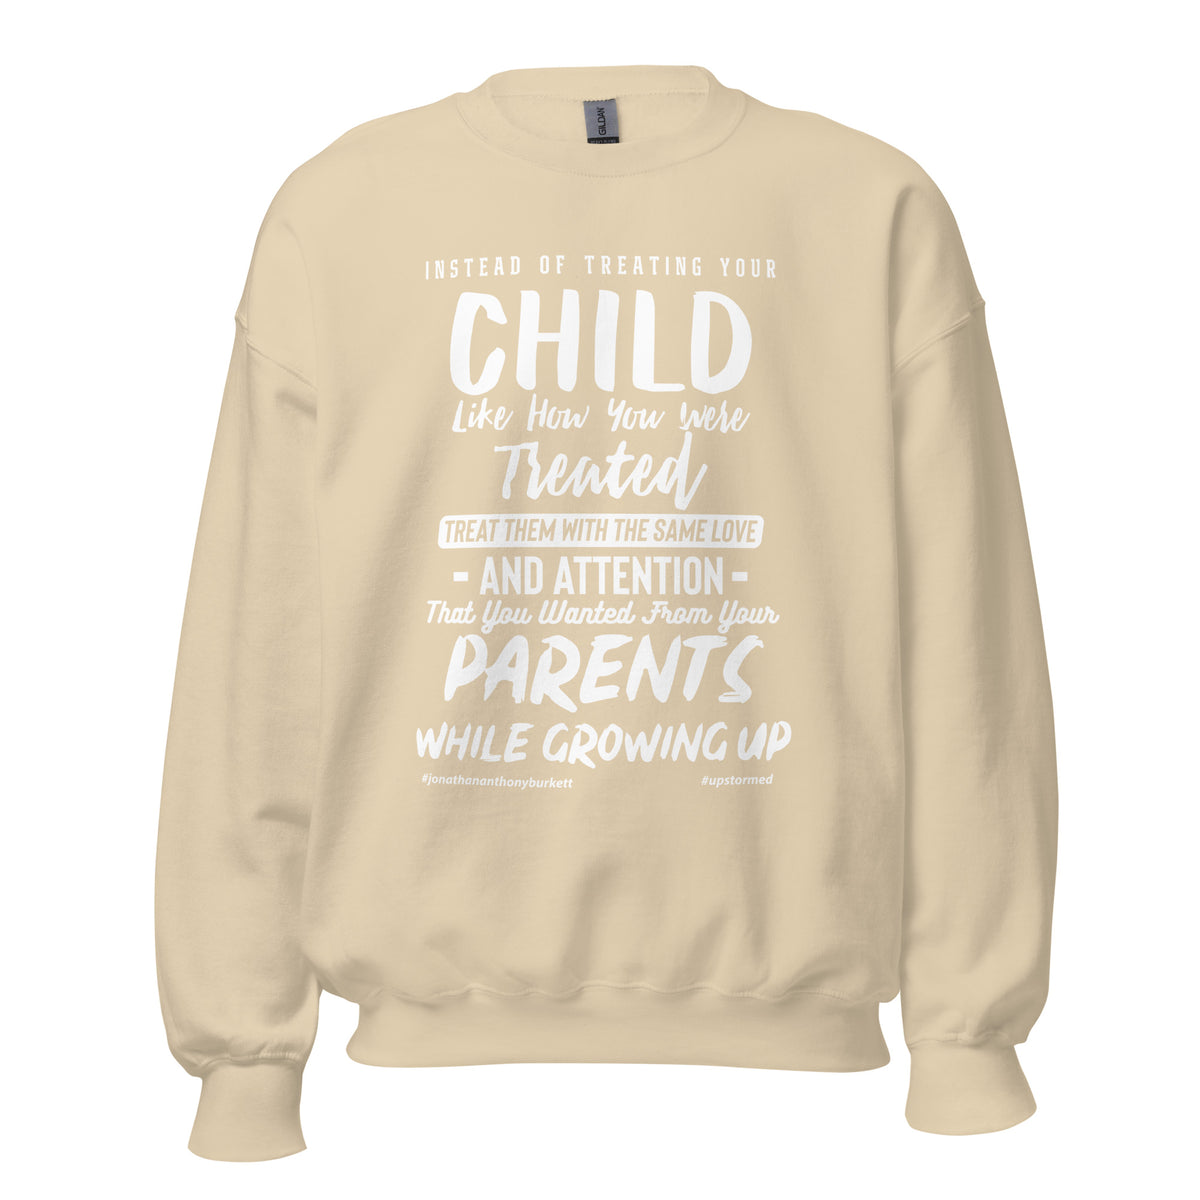 Treating Your Child Upstormed Sweatshirt